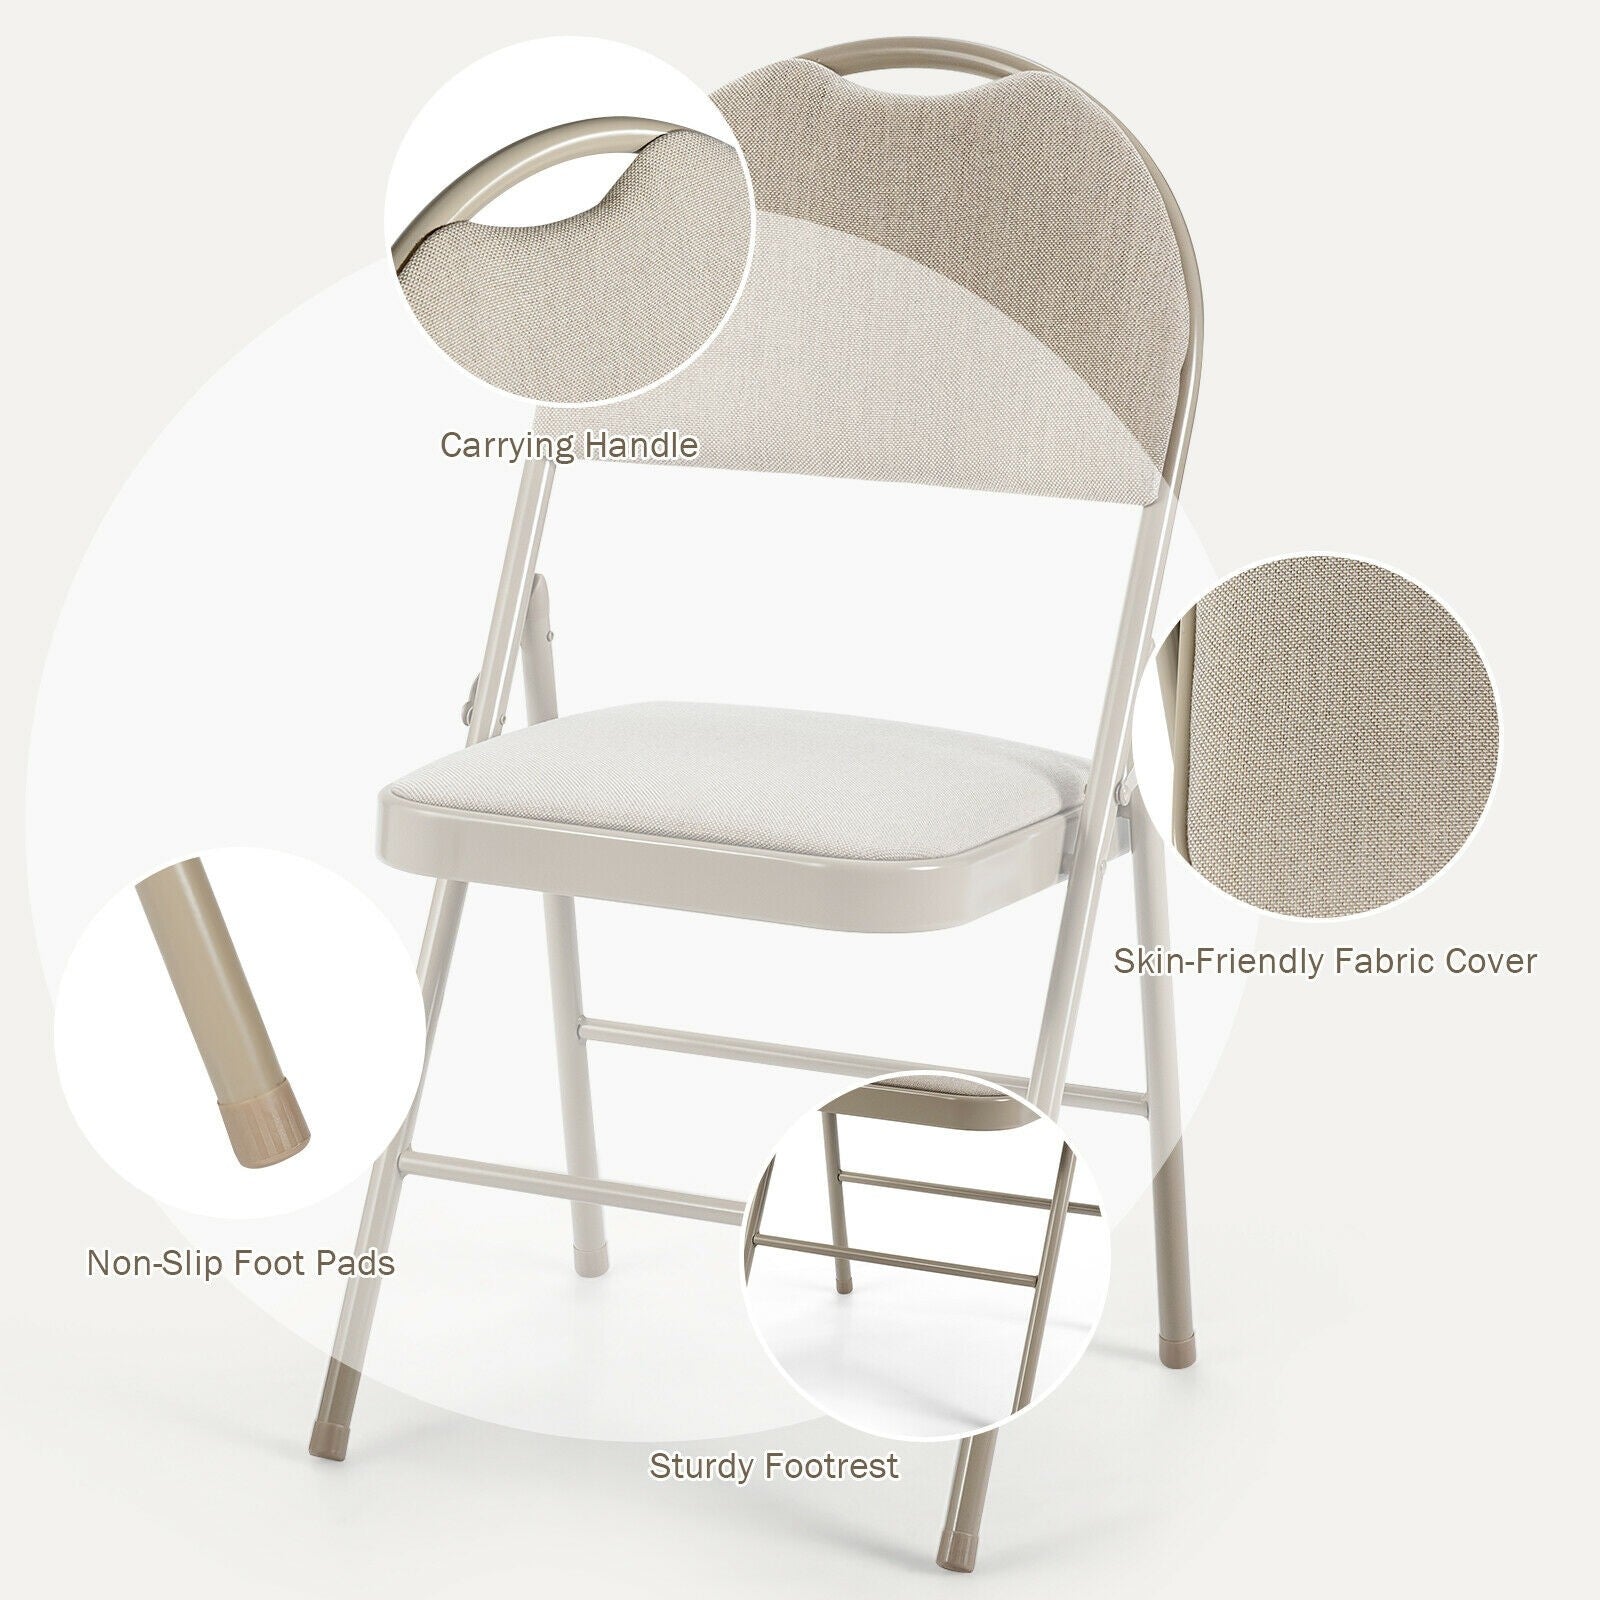 6 PCS Folding Chairs Set Portable Backrest Chair - Giantexus